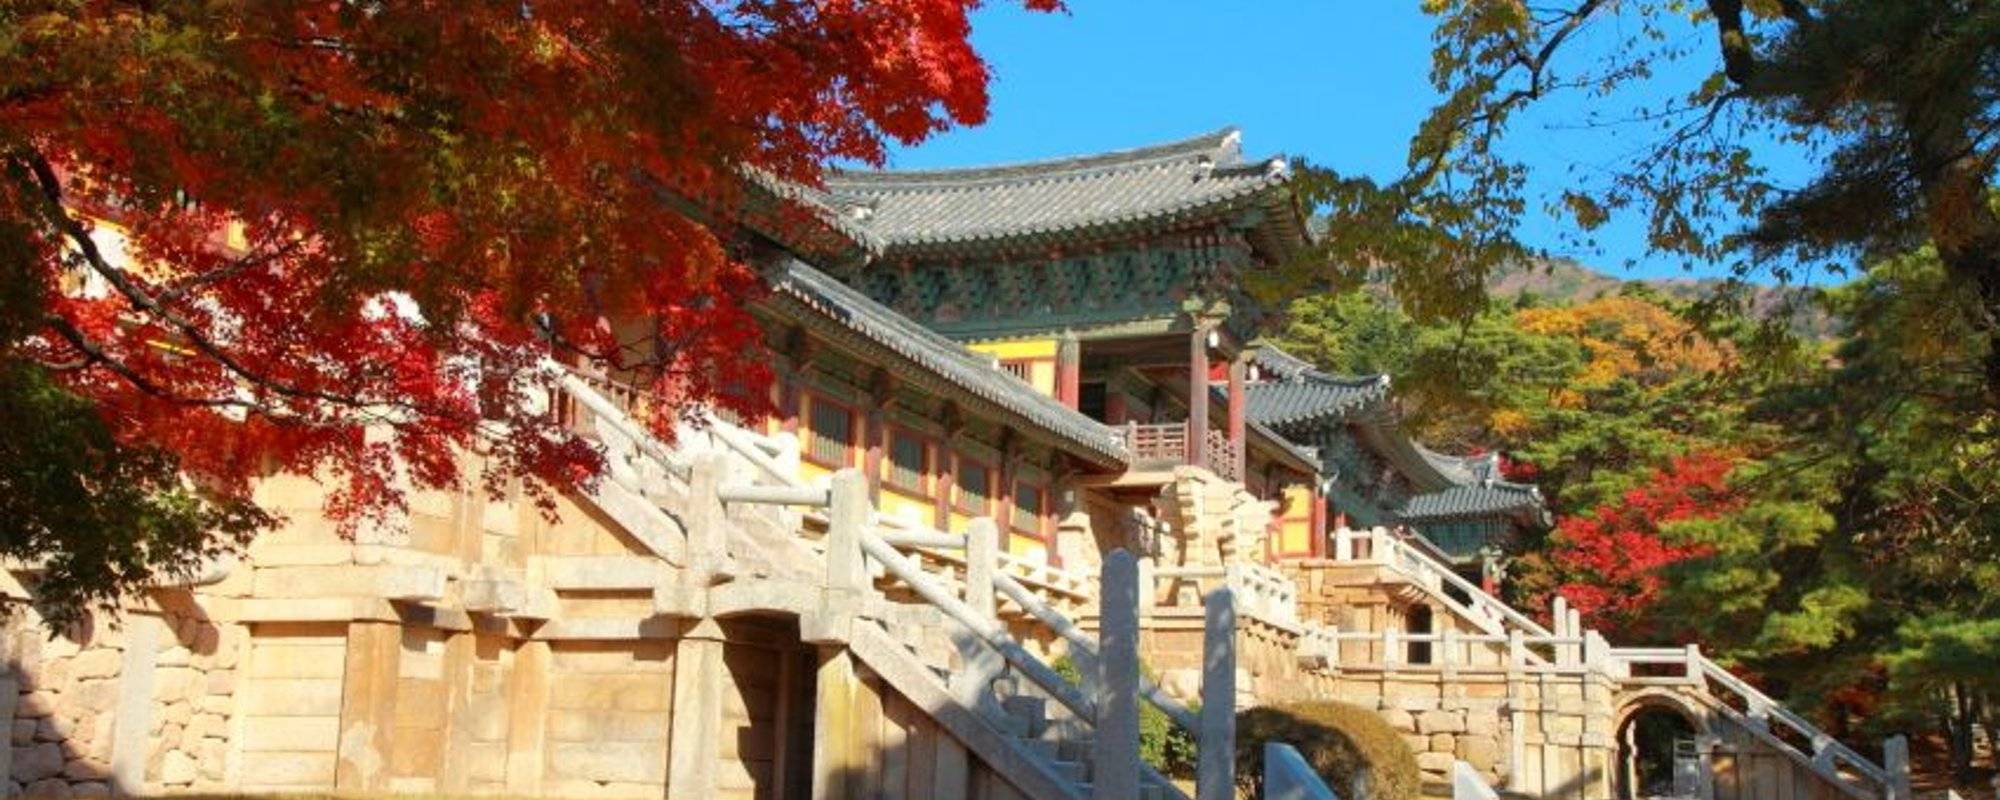 UNESCO World Heritage Site. Bulsuksa Temple in South Korea